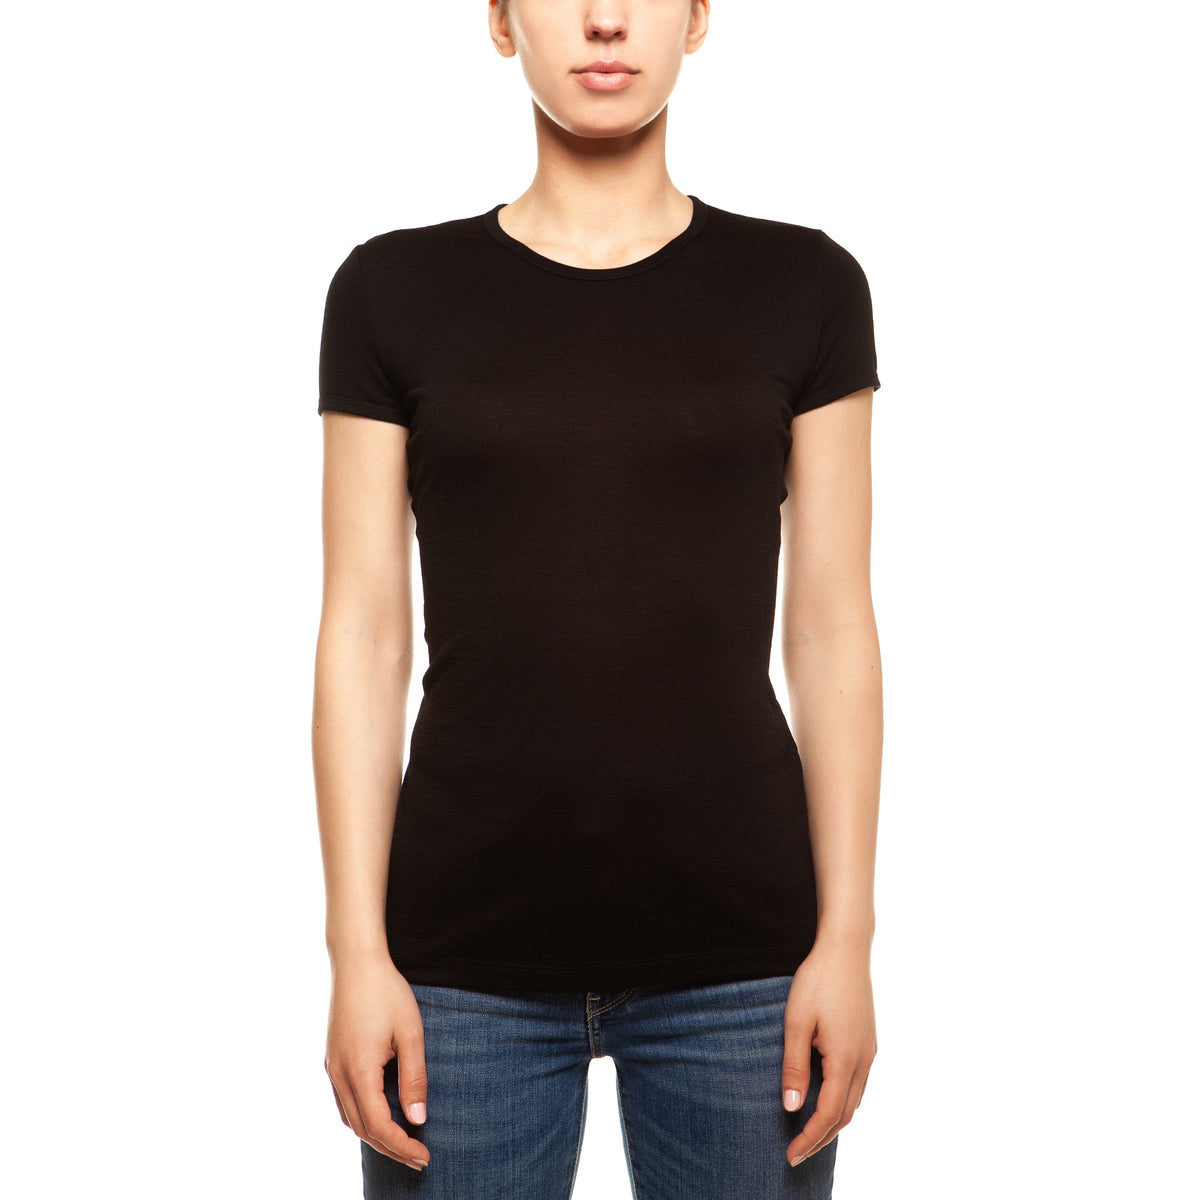 MENIQUE 100% Merino Wool Womens T-Shirt & Bottom 2-Piece Black